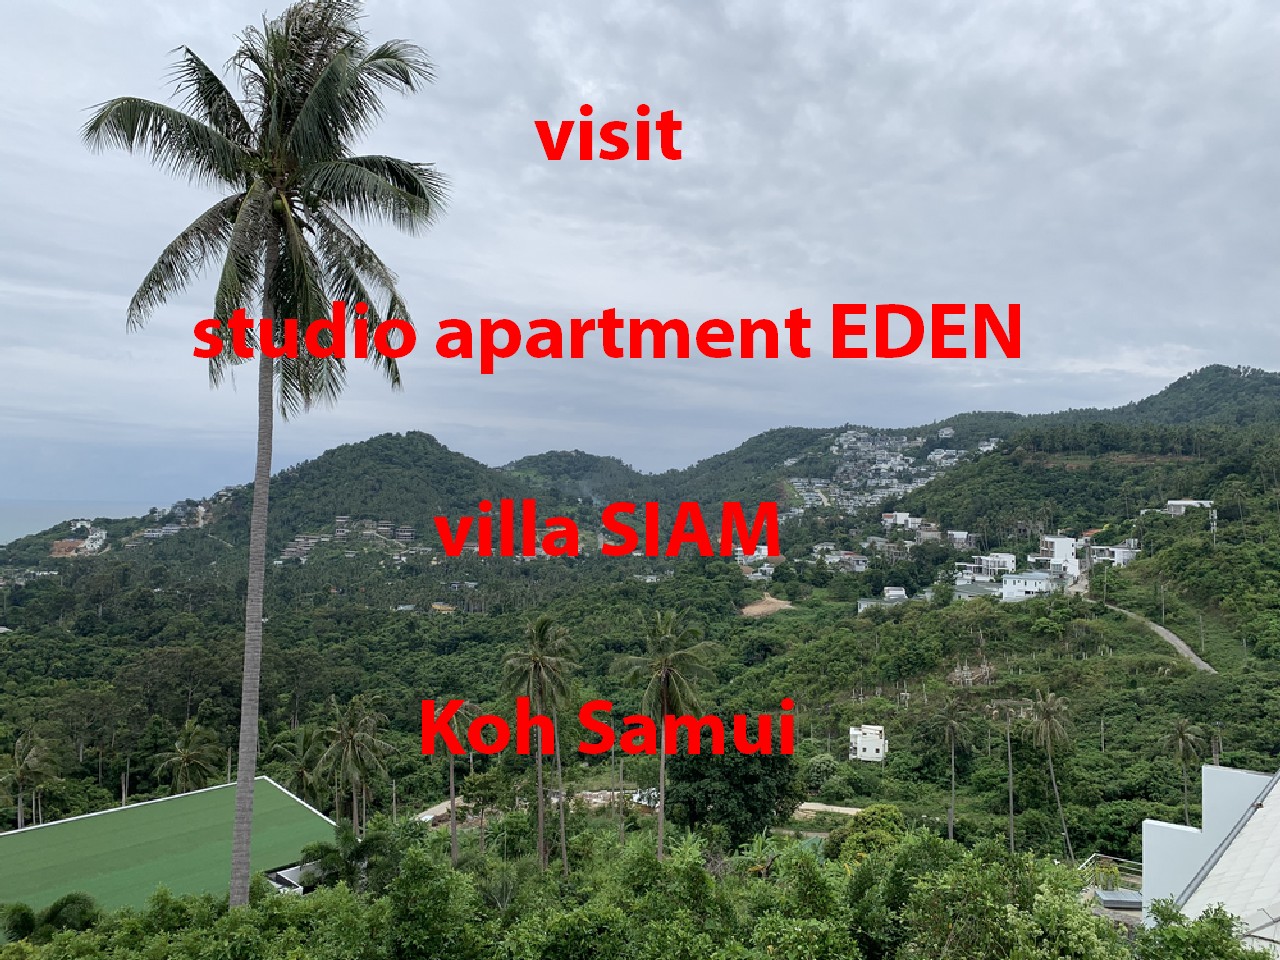 rental studio apartment EDEN for digital nomad long term Youtube